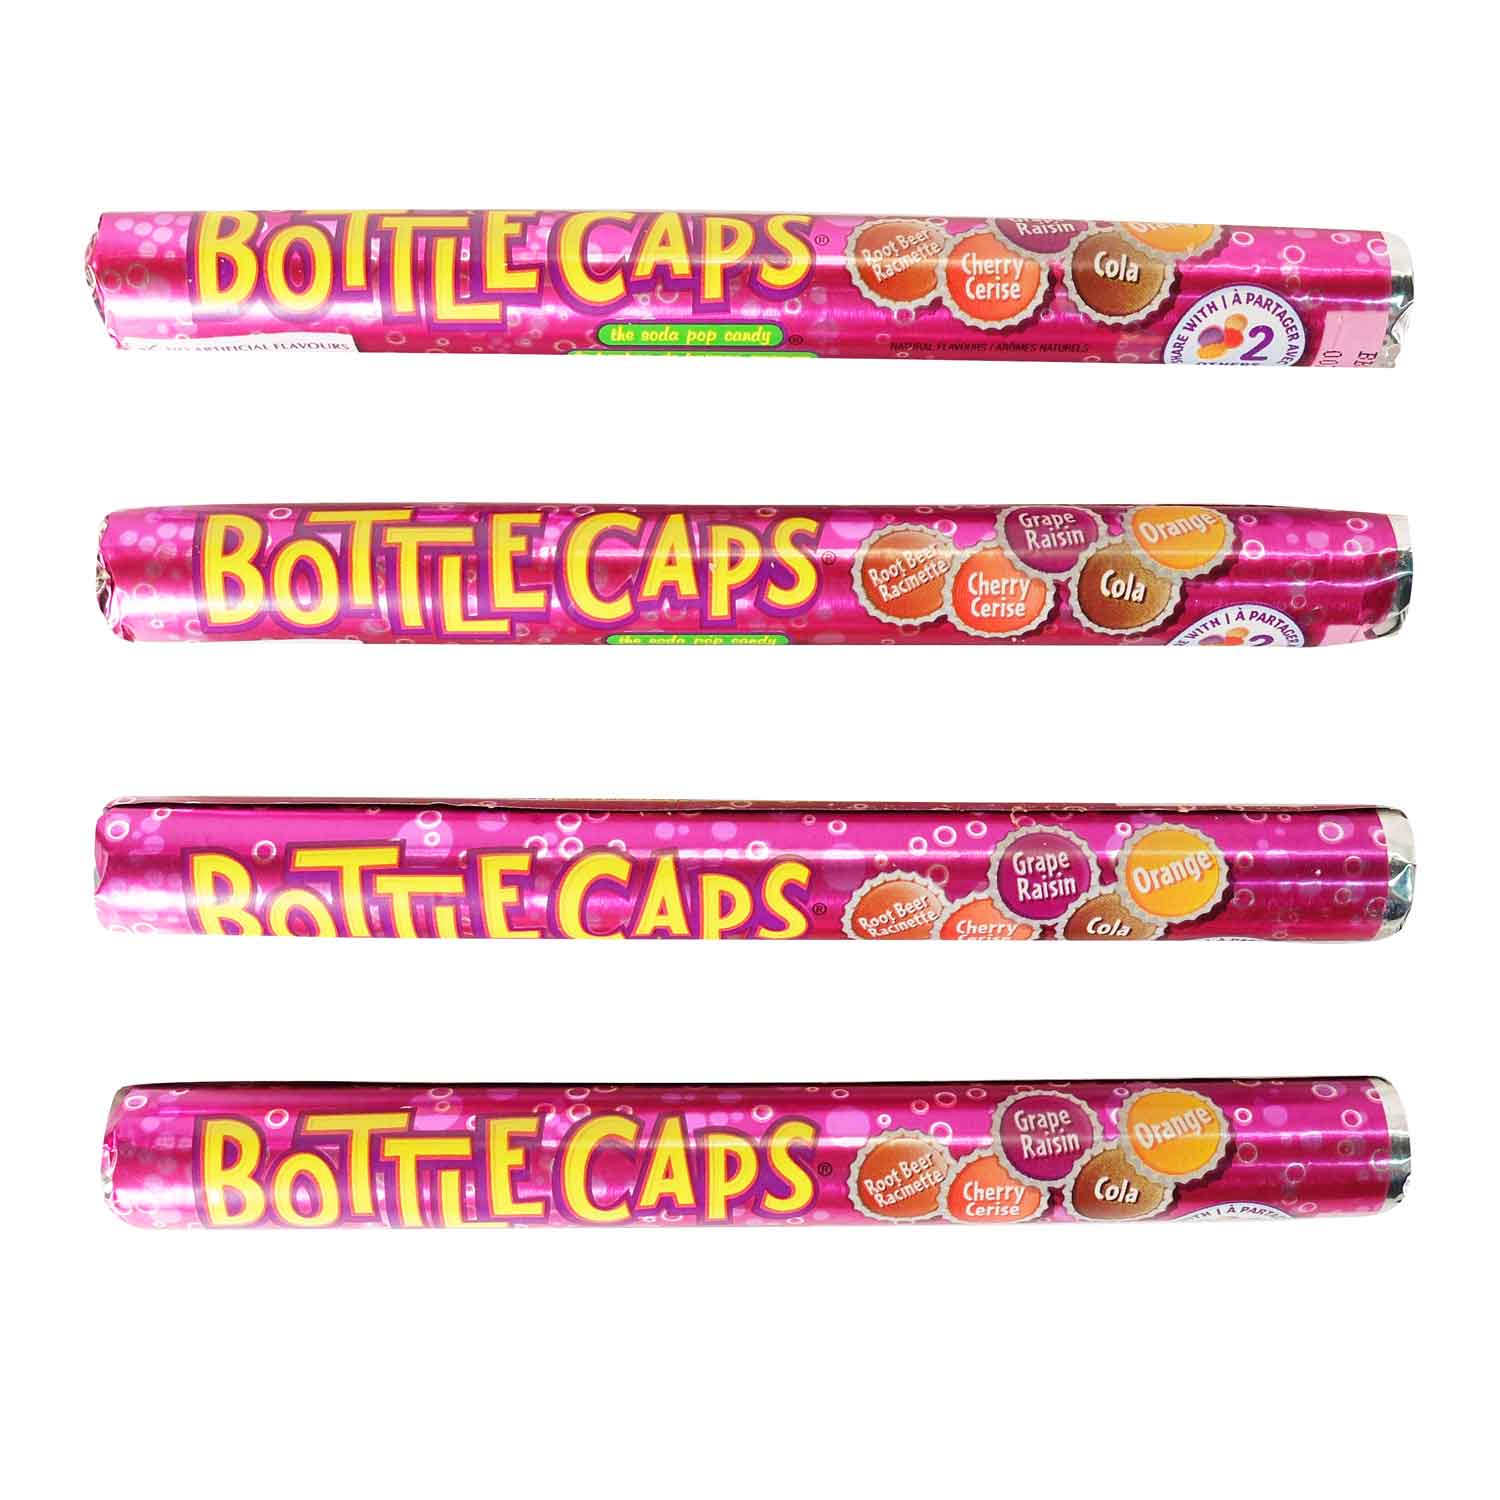 Bottle Caps Roll